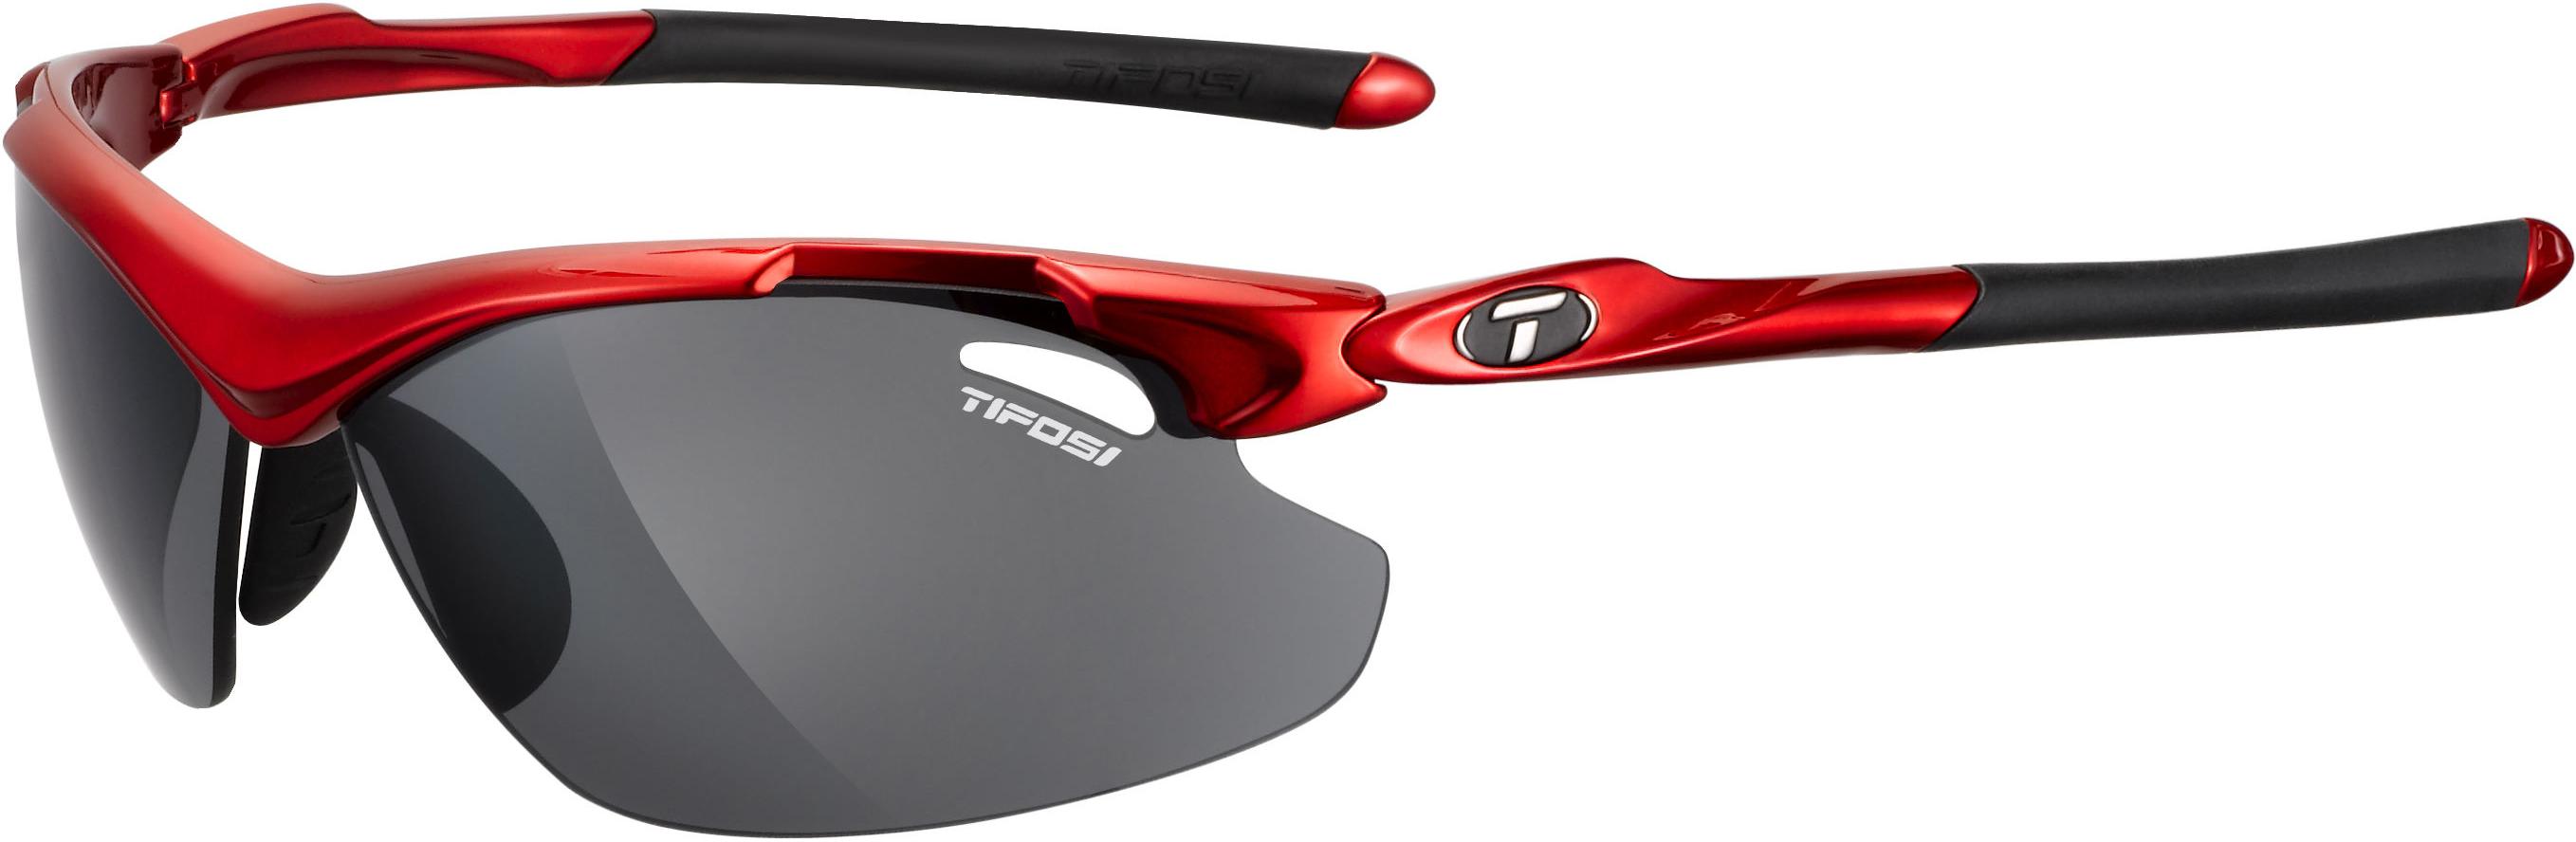 Tifosi Eyewear Tyrant 2.0 Sunglasses - Red